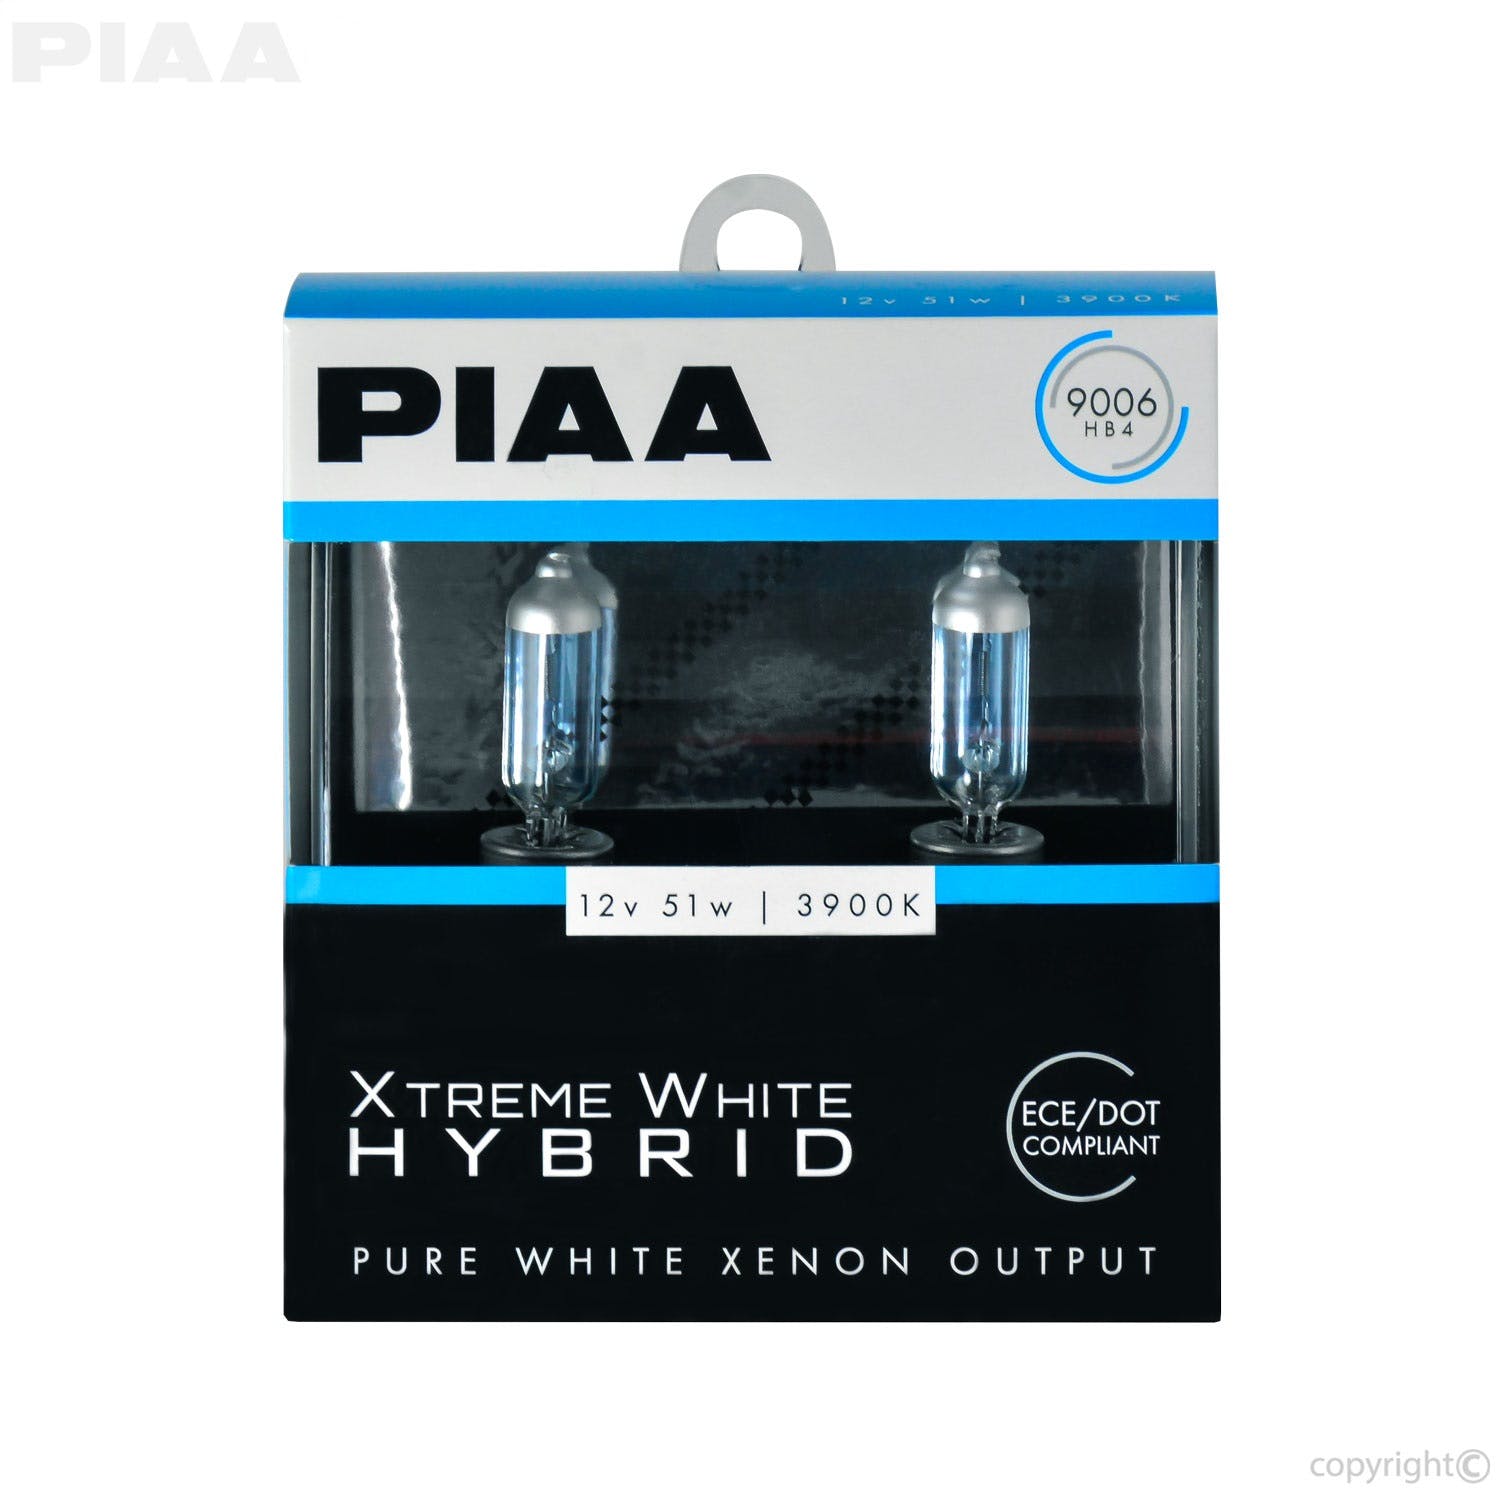 PIAA 23-10196 9006 (HB4) Xtreme White Hybrid Twin Pack - 3900K - 12V 51W